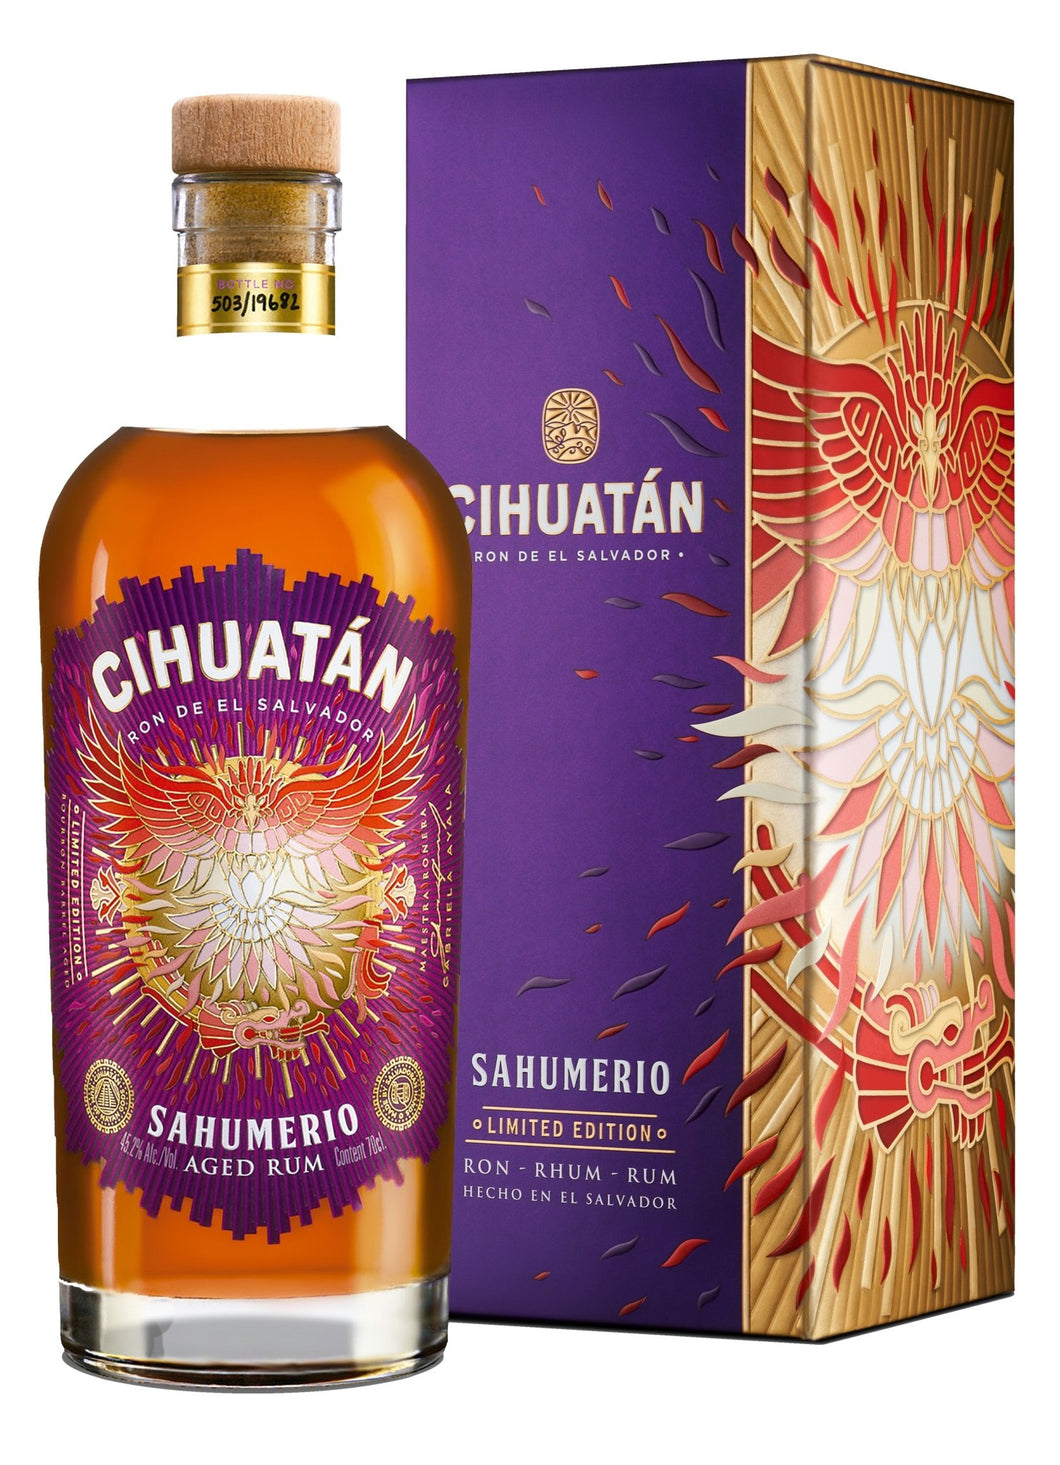 Cihuatan Sahumerio limited edition 2020 Rhum Rum el salvador 0,7l 45,2%